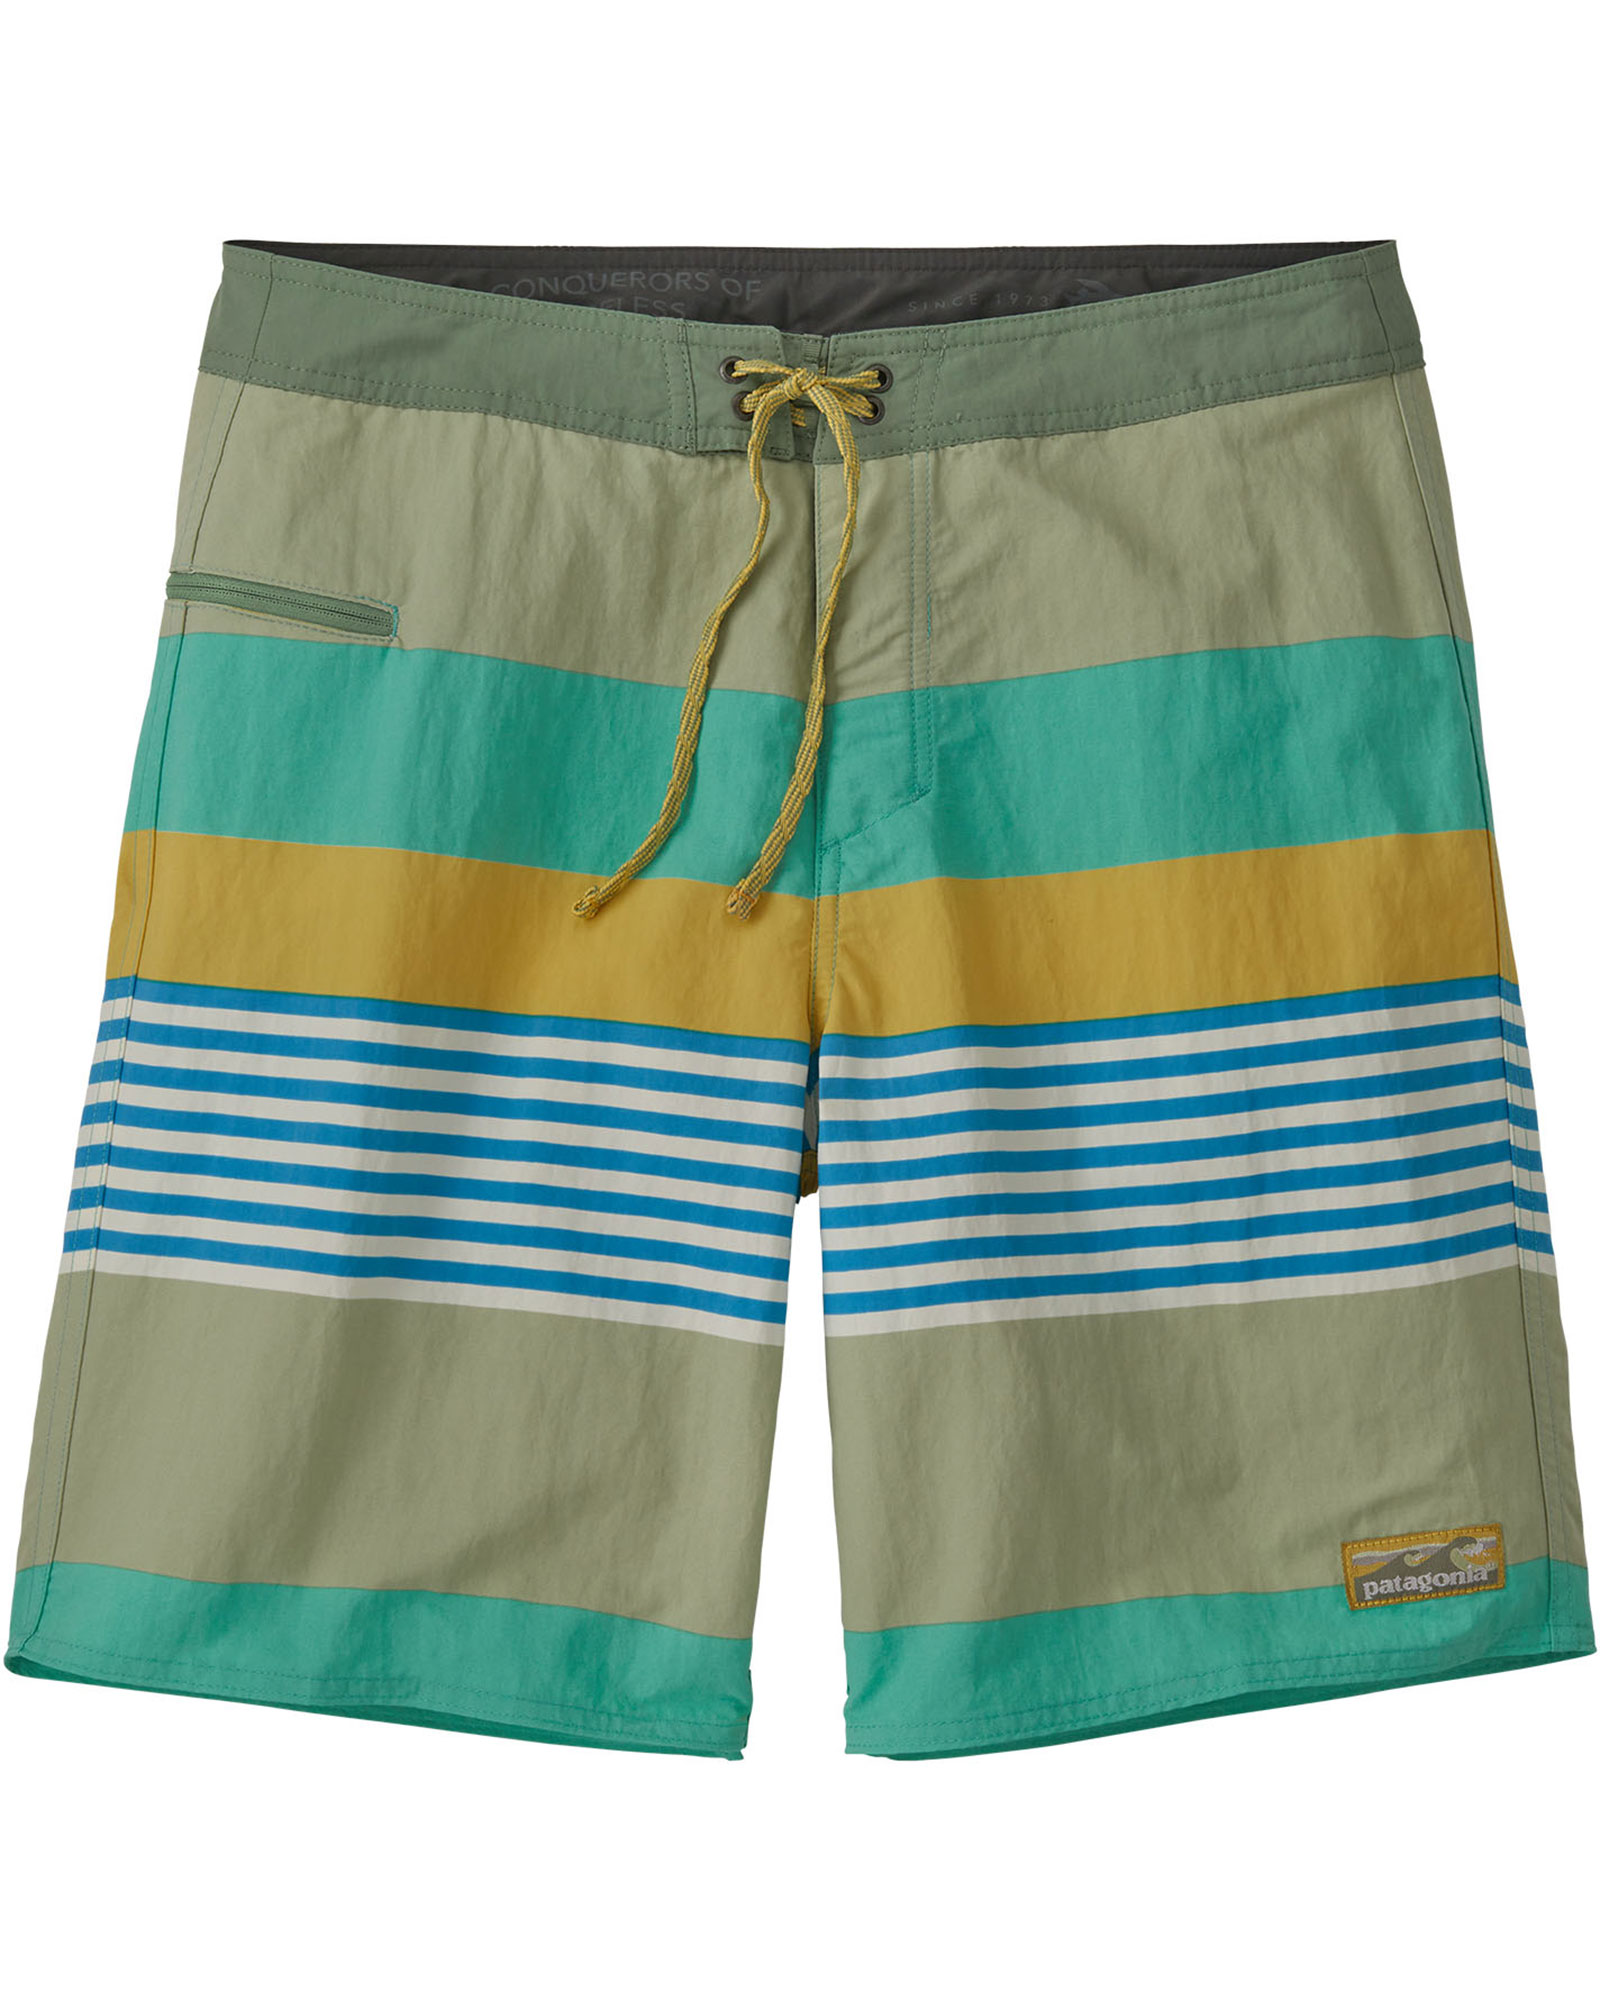 Patagonia Wavefarer Men’s 19" Board Shorts - Fitz Stripe/ Fresh Teal 36"